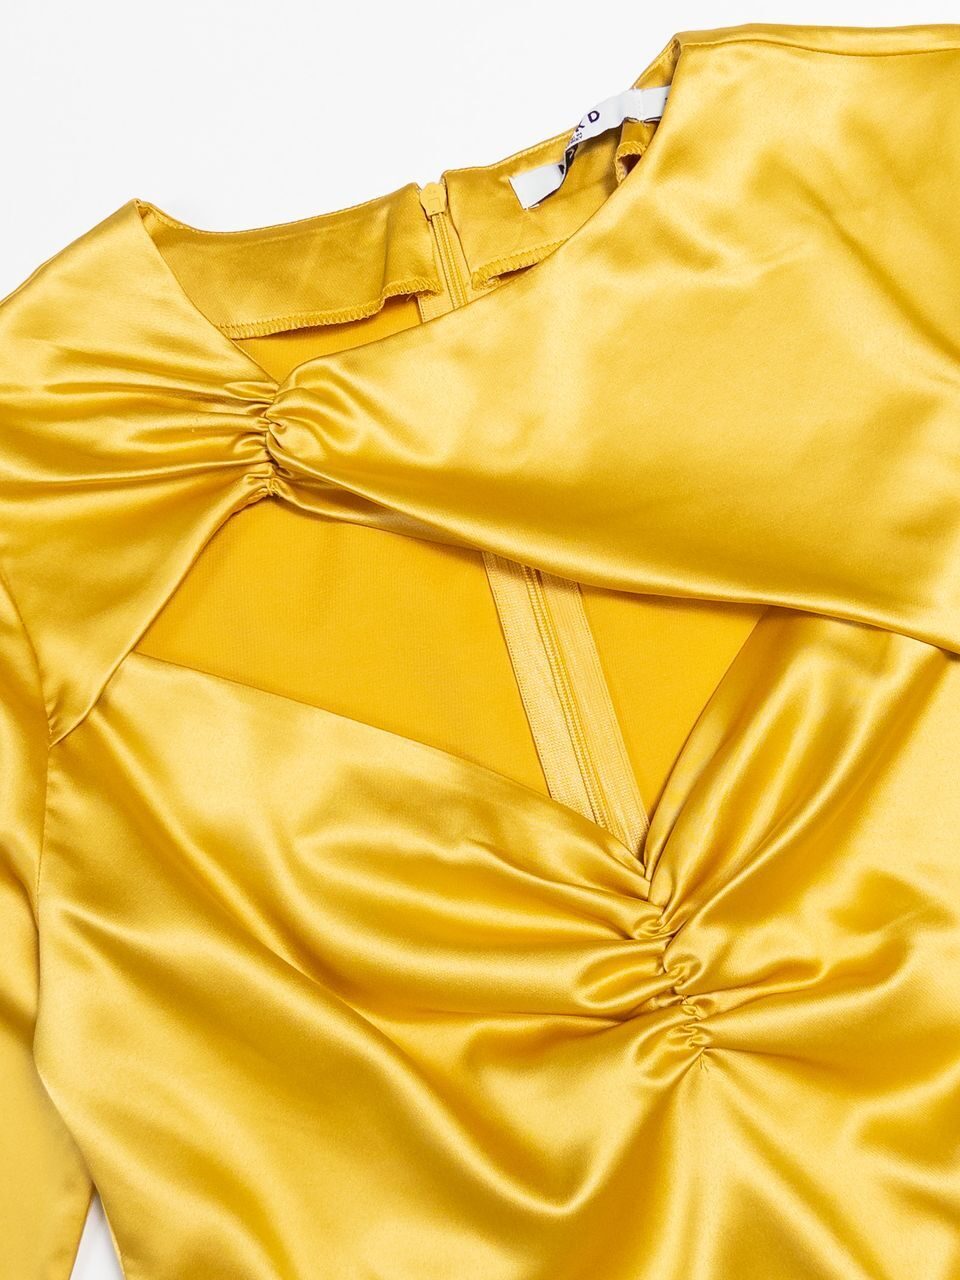 Блуза атласная с вырезом на груди цвет золото размер 36 (44 RUS) NA-KD